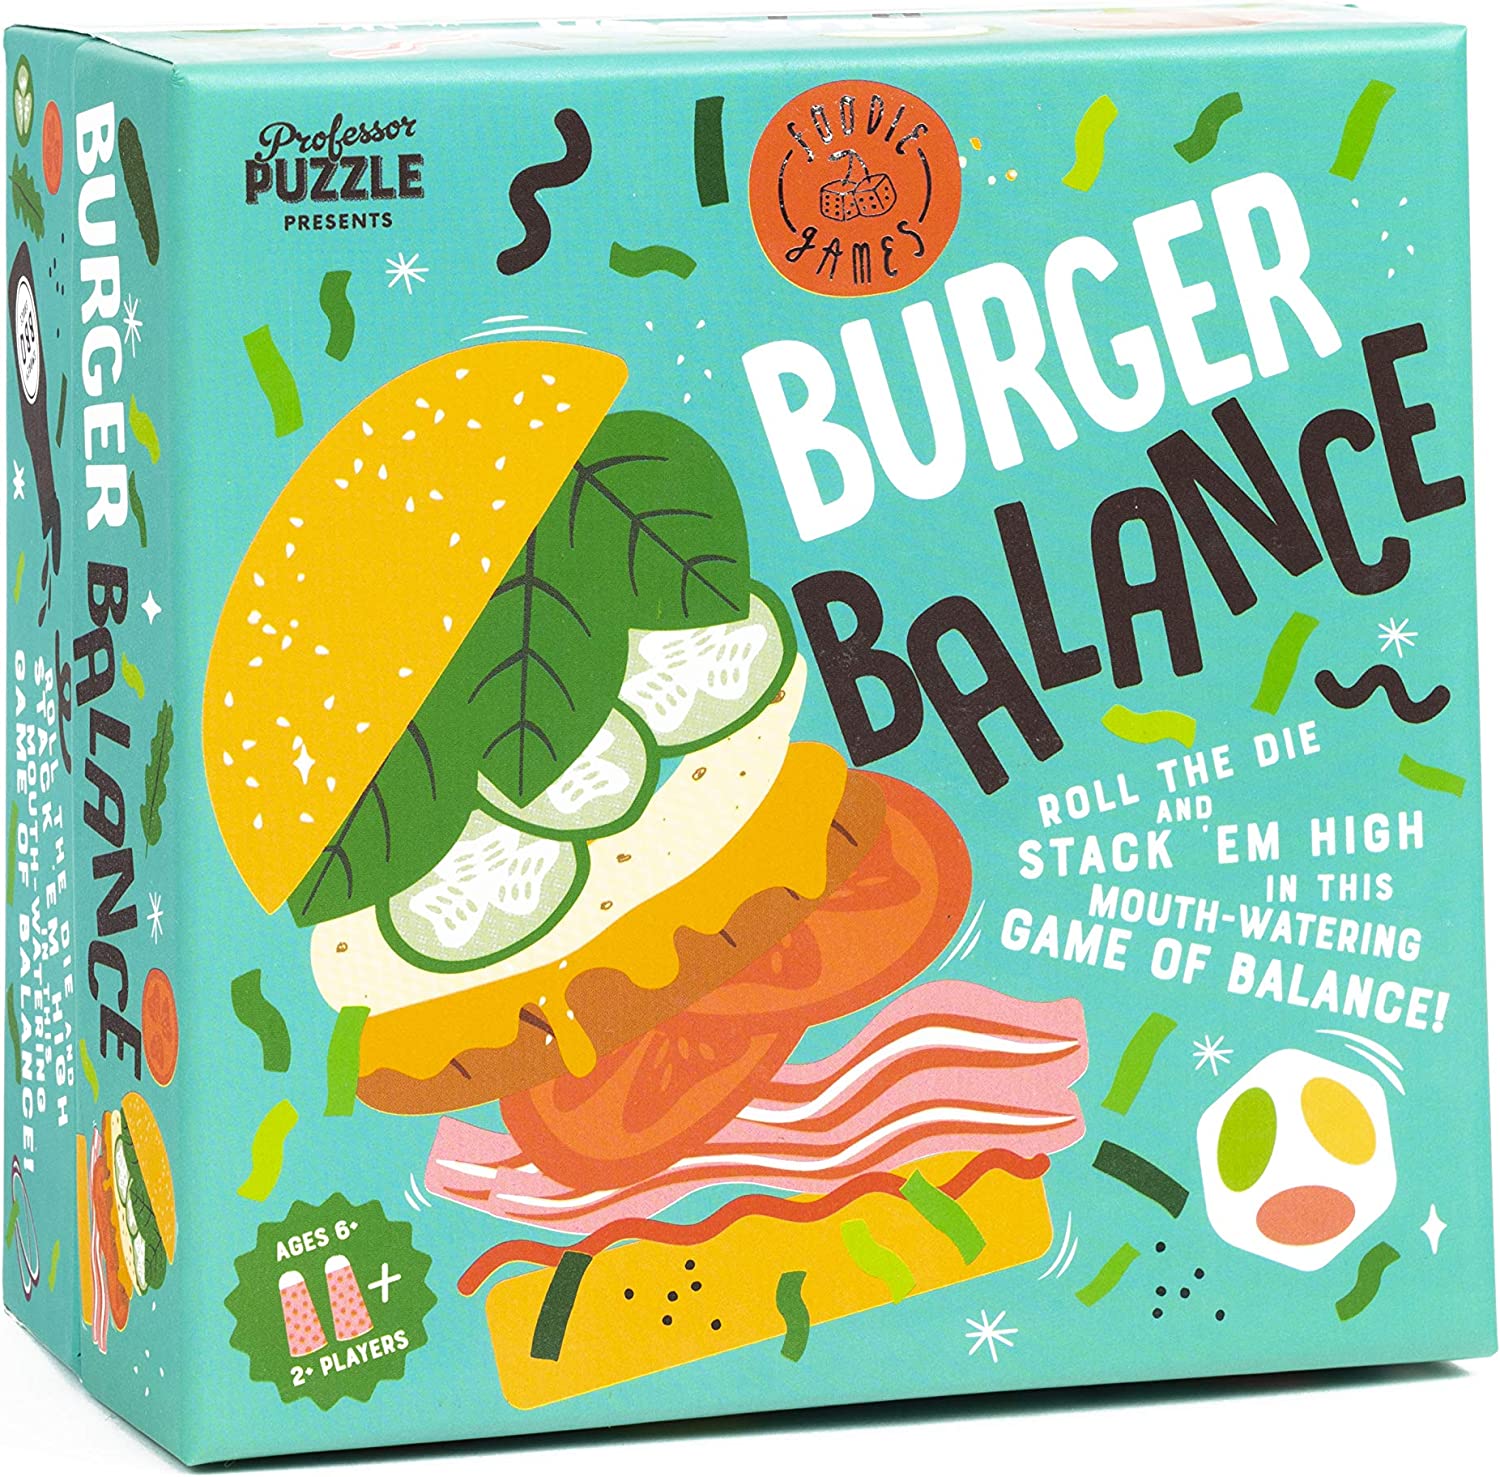 Burger Balance Professor Puzzler Games